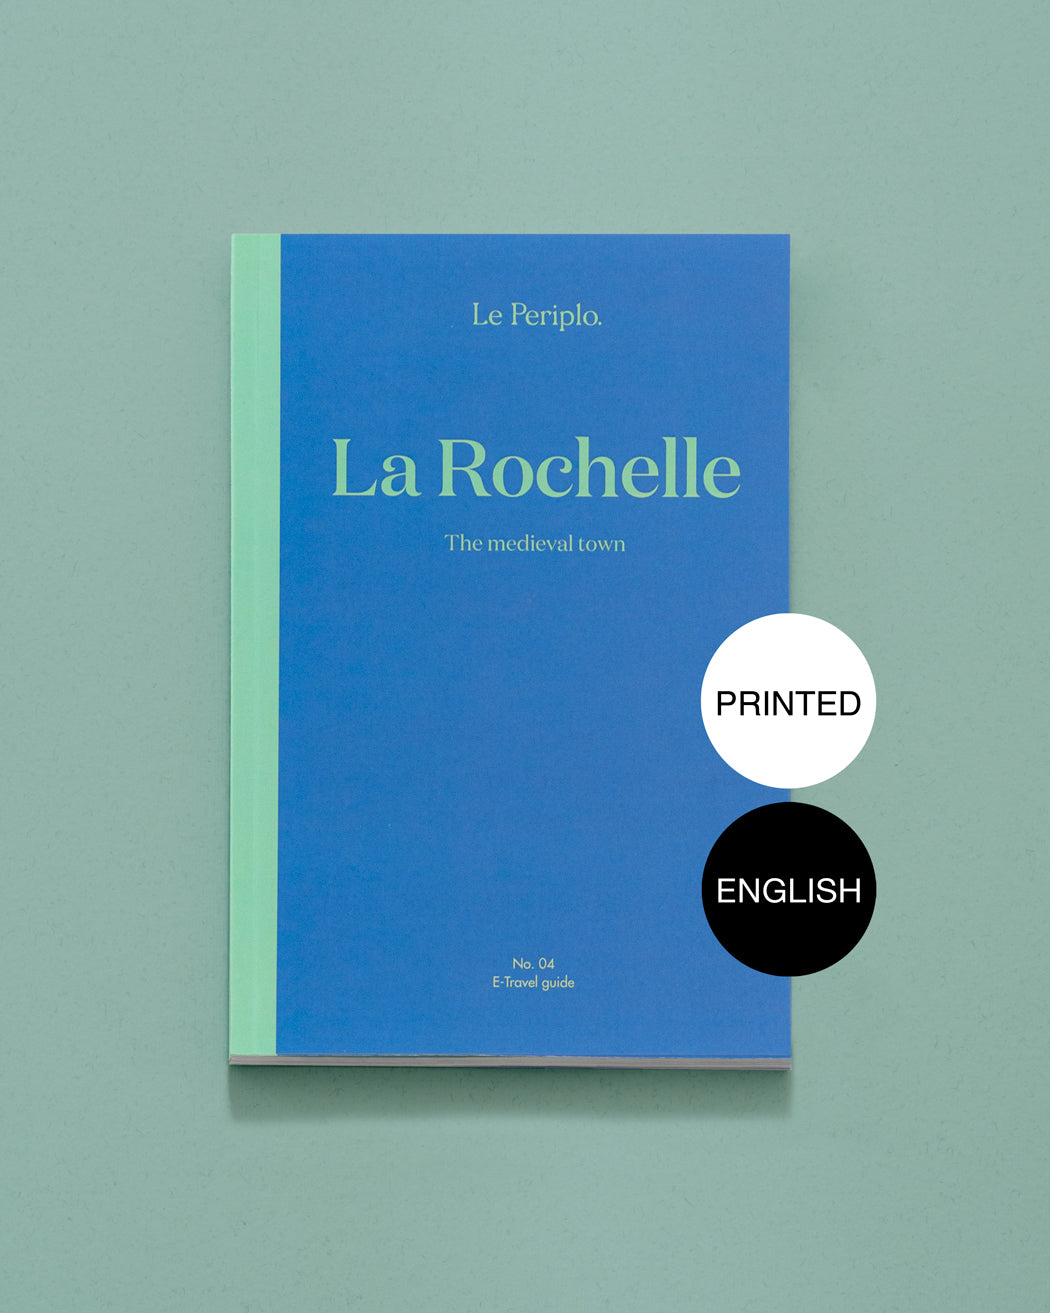 La Rochelle (printed) Spanish version